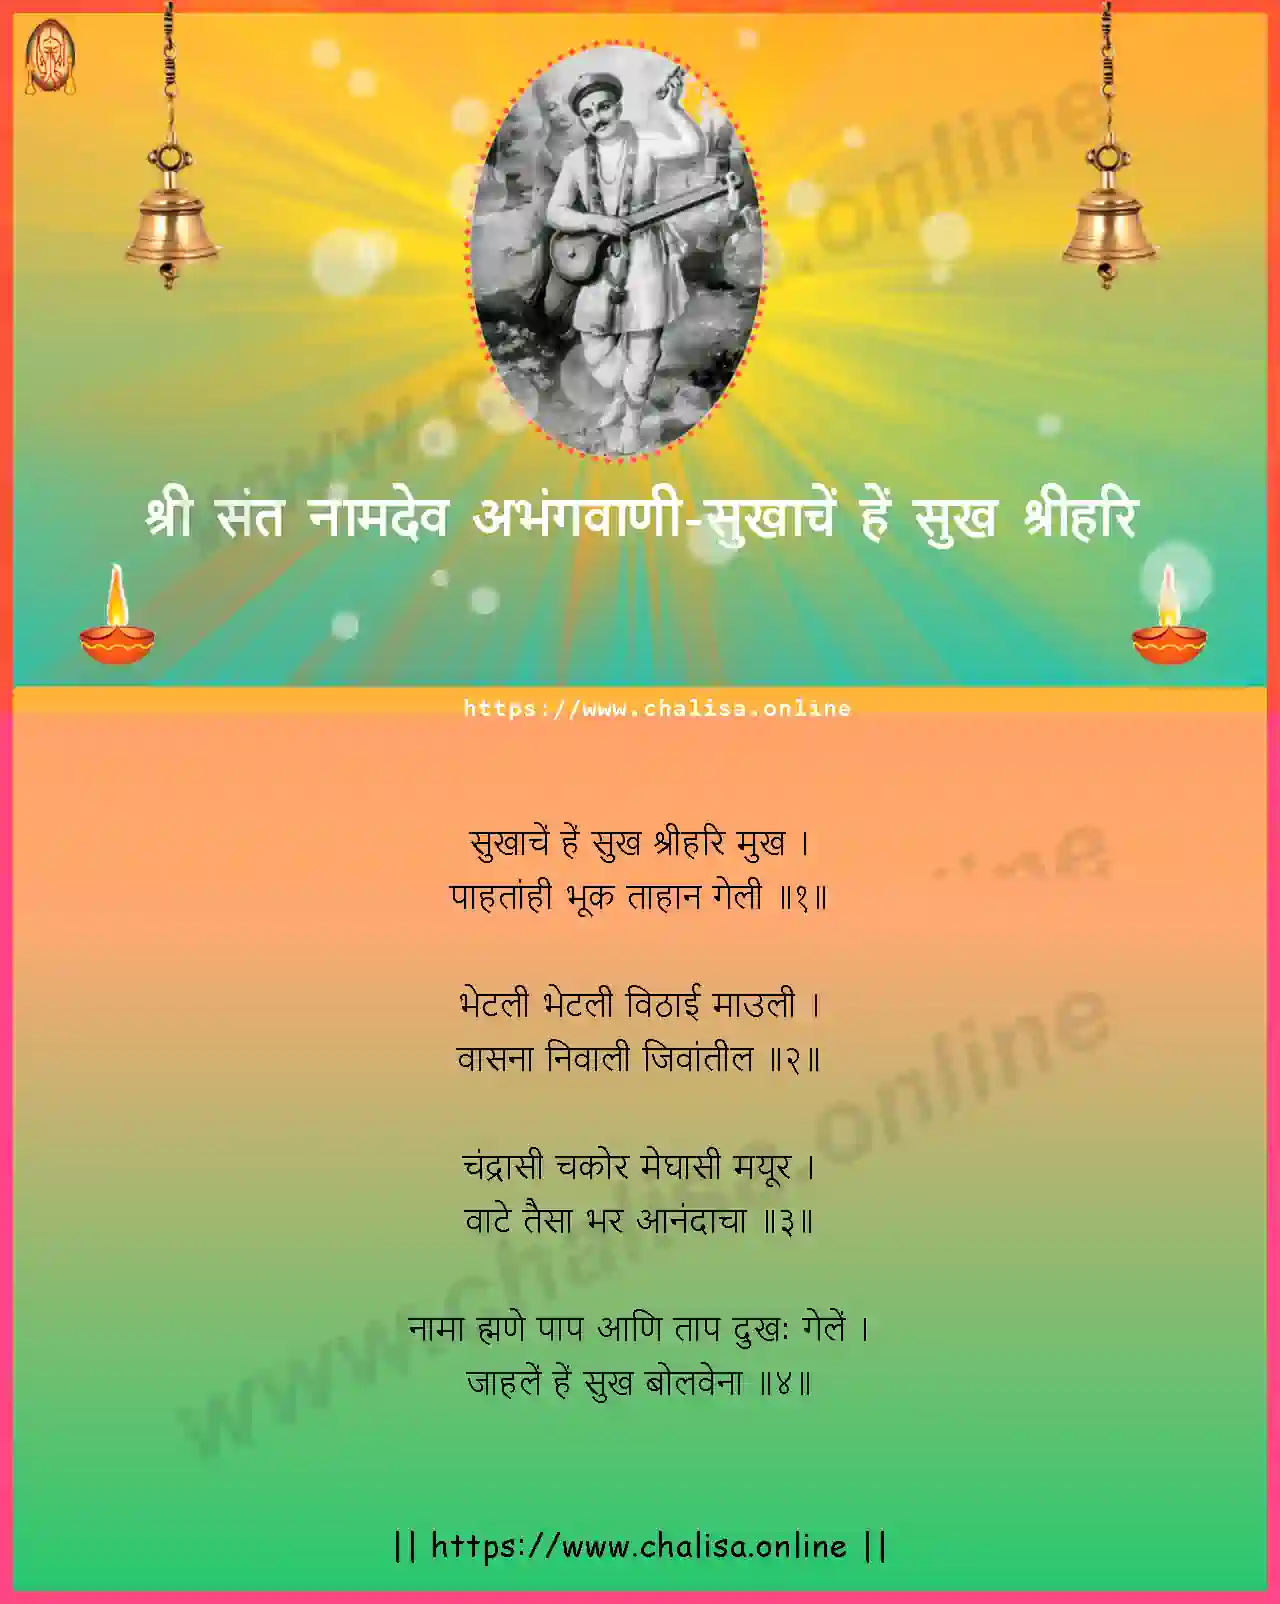 sukhache-he-sukh-shri-shri-sant-namadev-abhang-marathi-lyrics-download